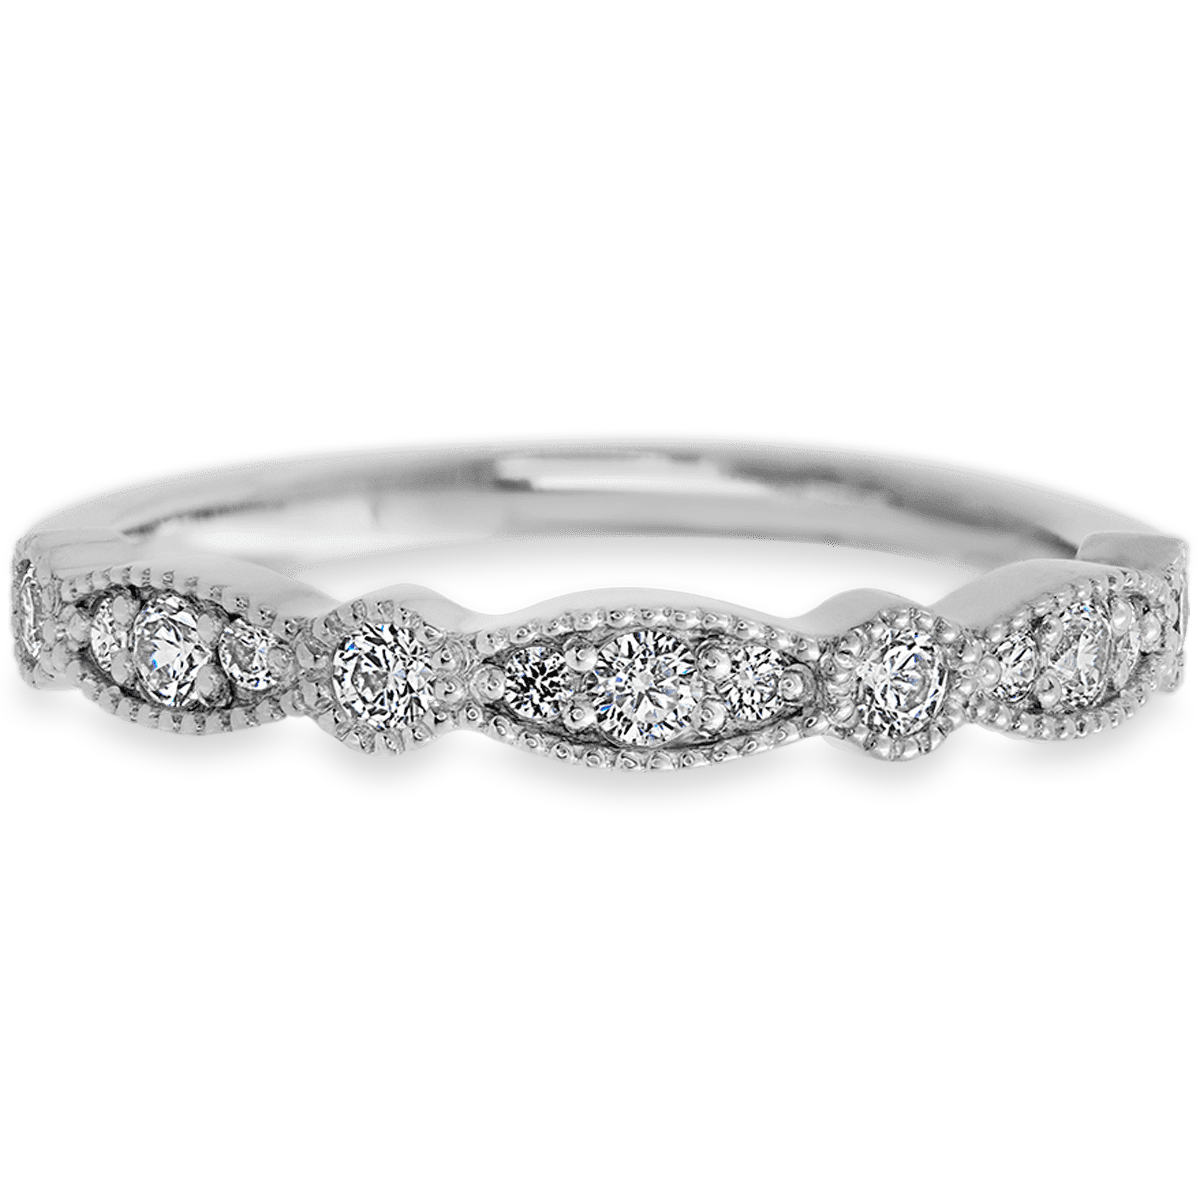 Vintage 14k White Gold + White Diamonds Womens Wedding or Everyday Ring